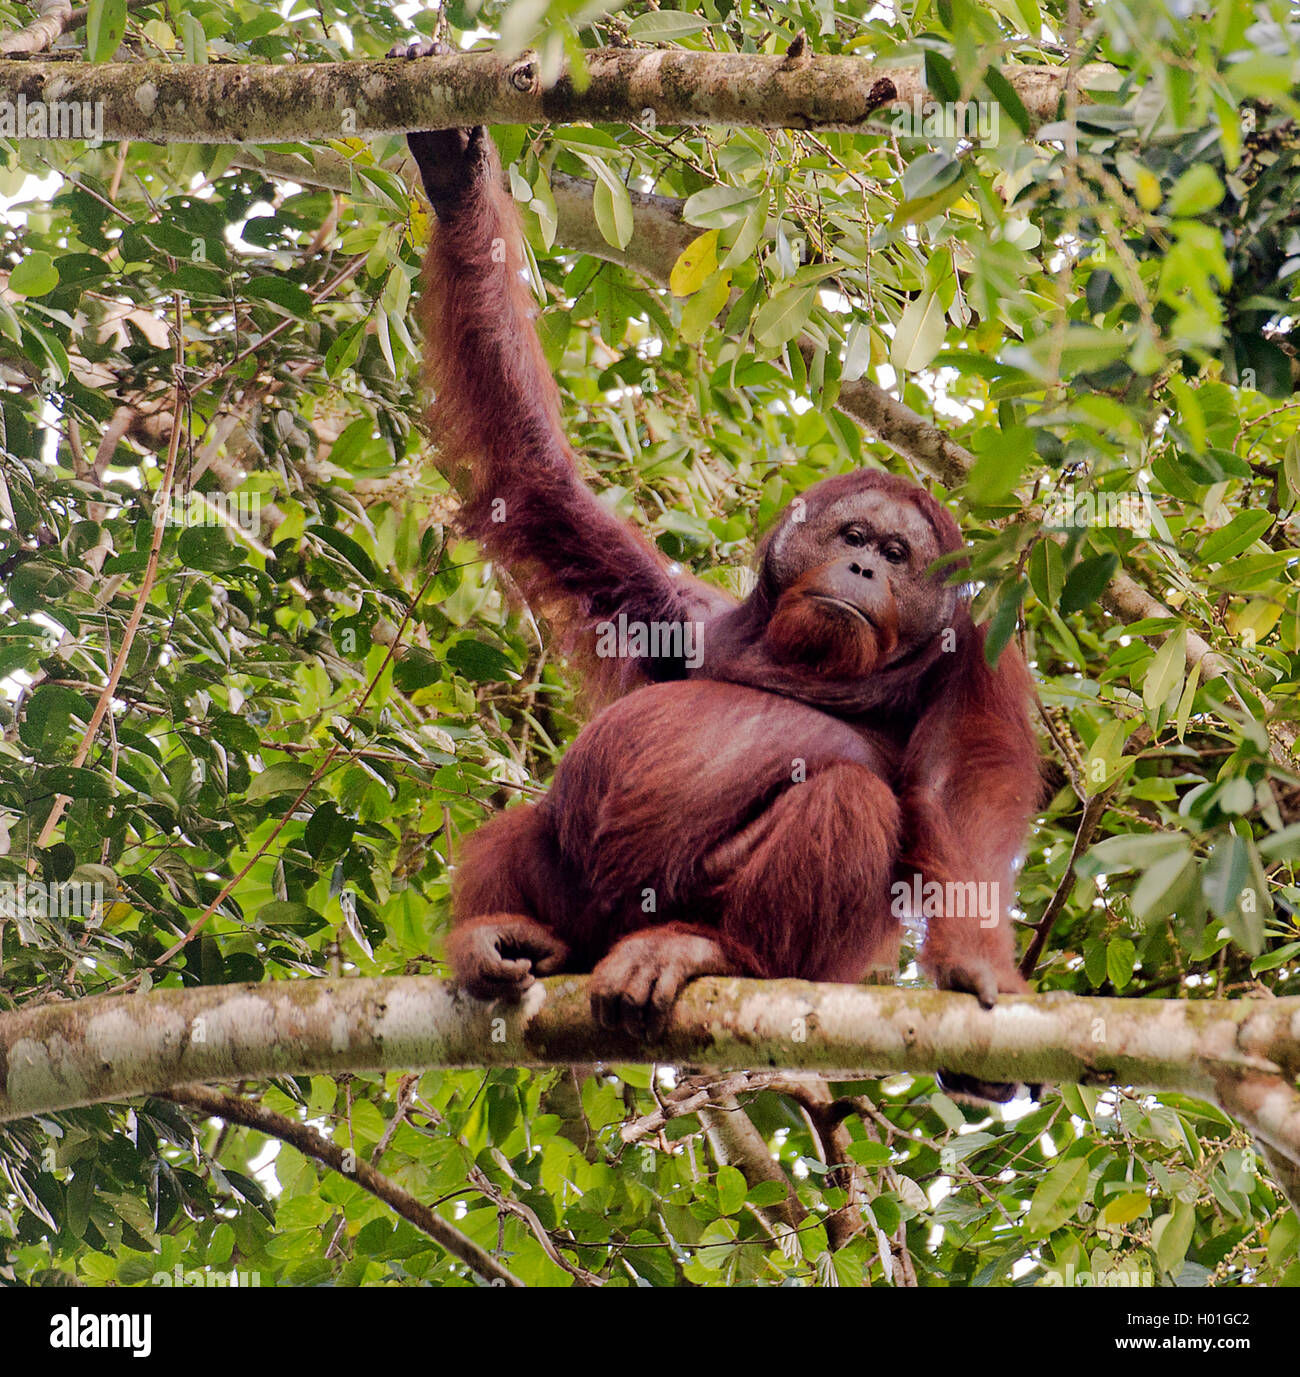 Nordoestlicher Borneo-Orang-Utan, Borneo-Orang-Utan, Borneo-Orangutan (Pongo pygmaeus morio), maennlicher Orang-Utan in einer Ba Stock Photo